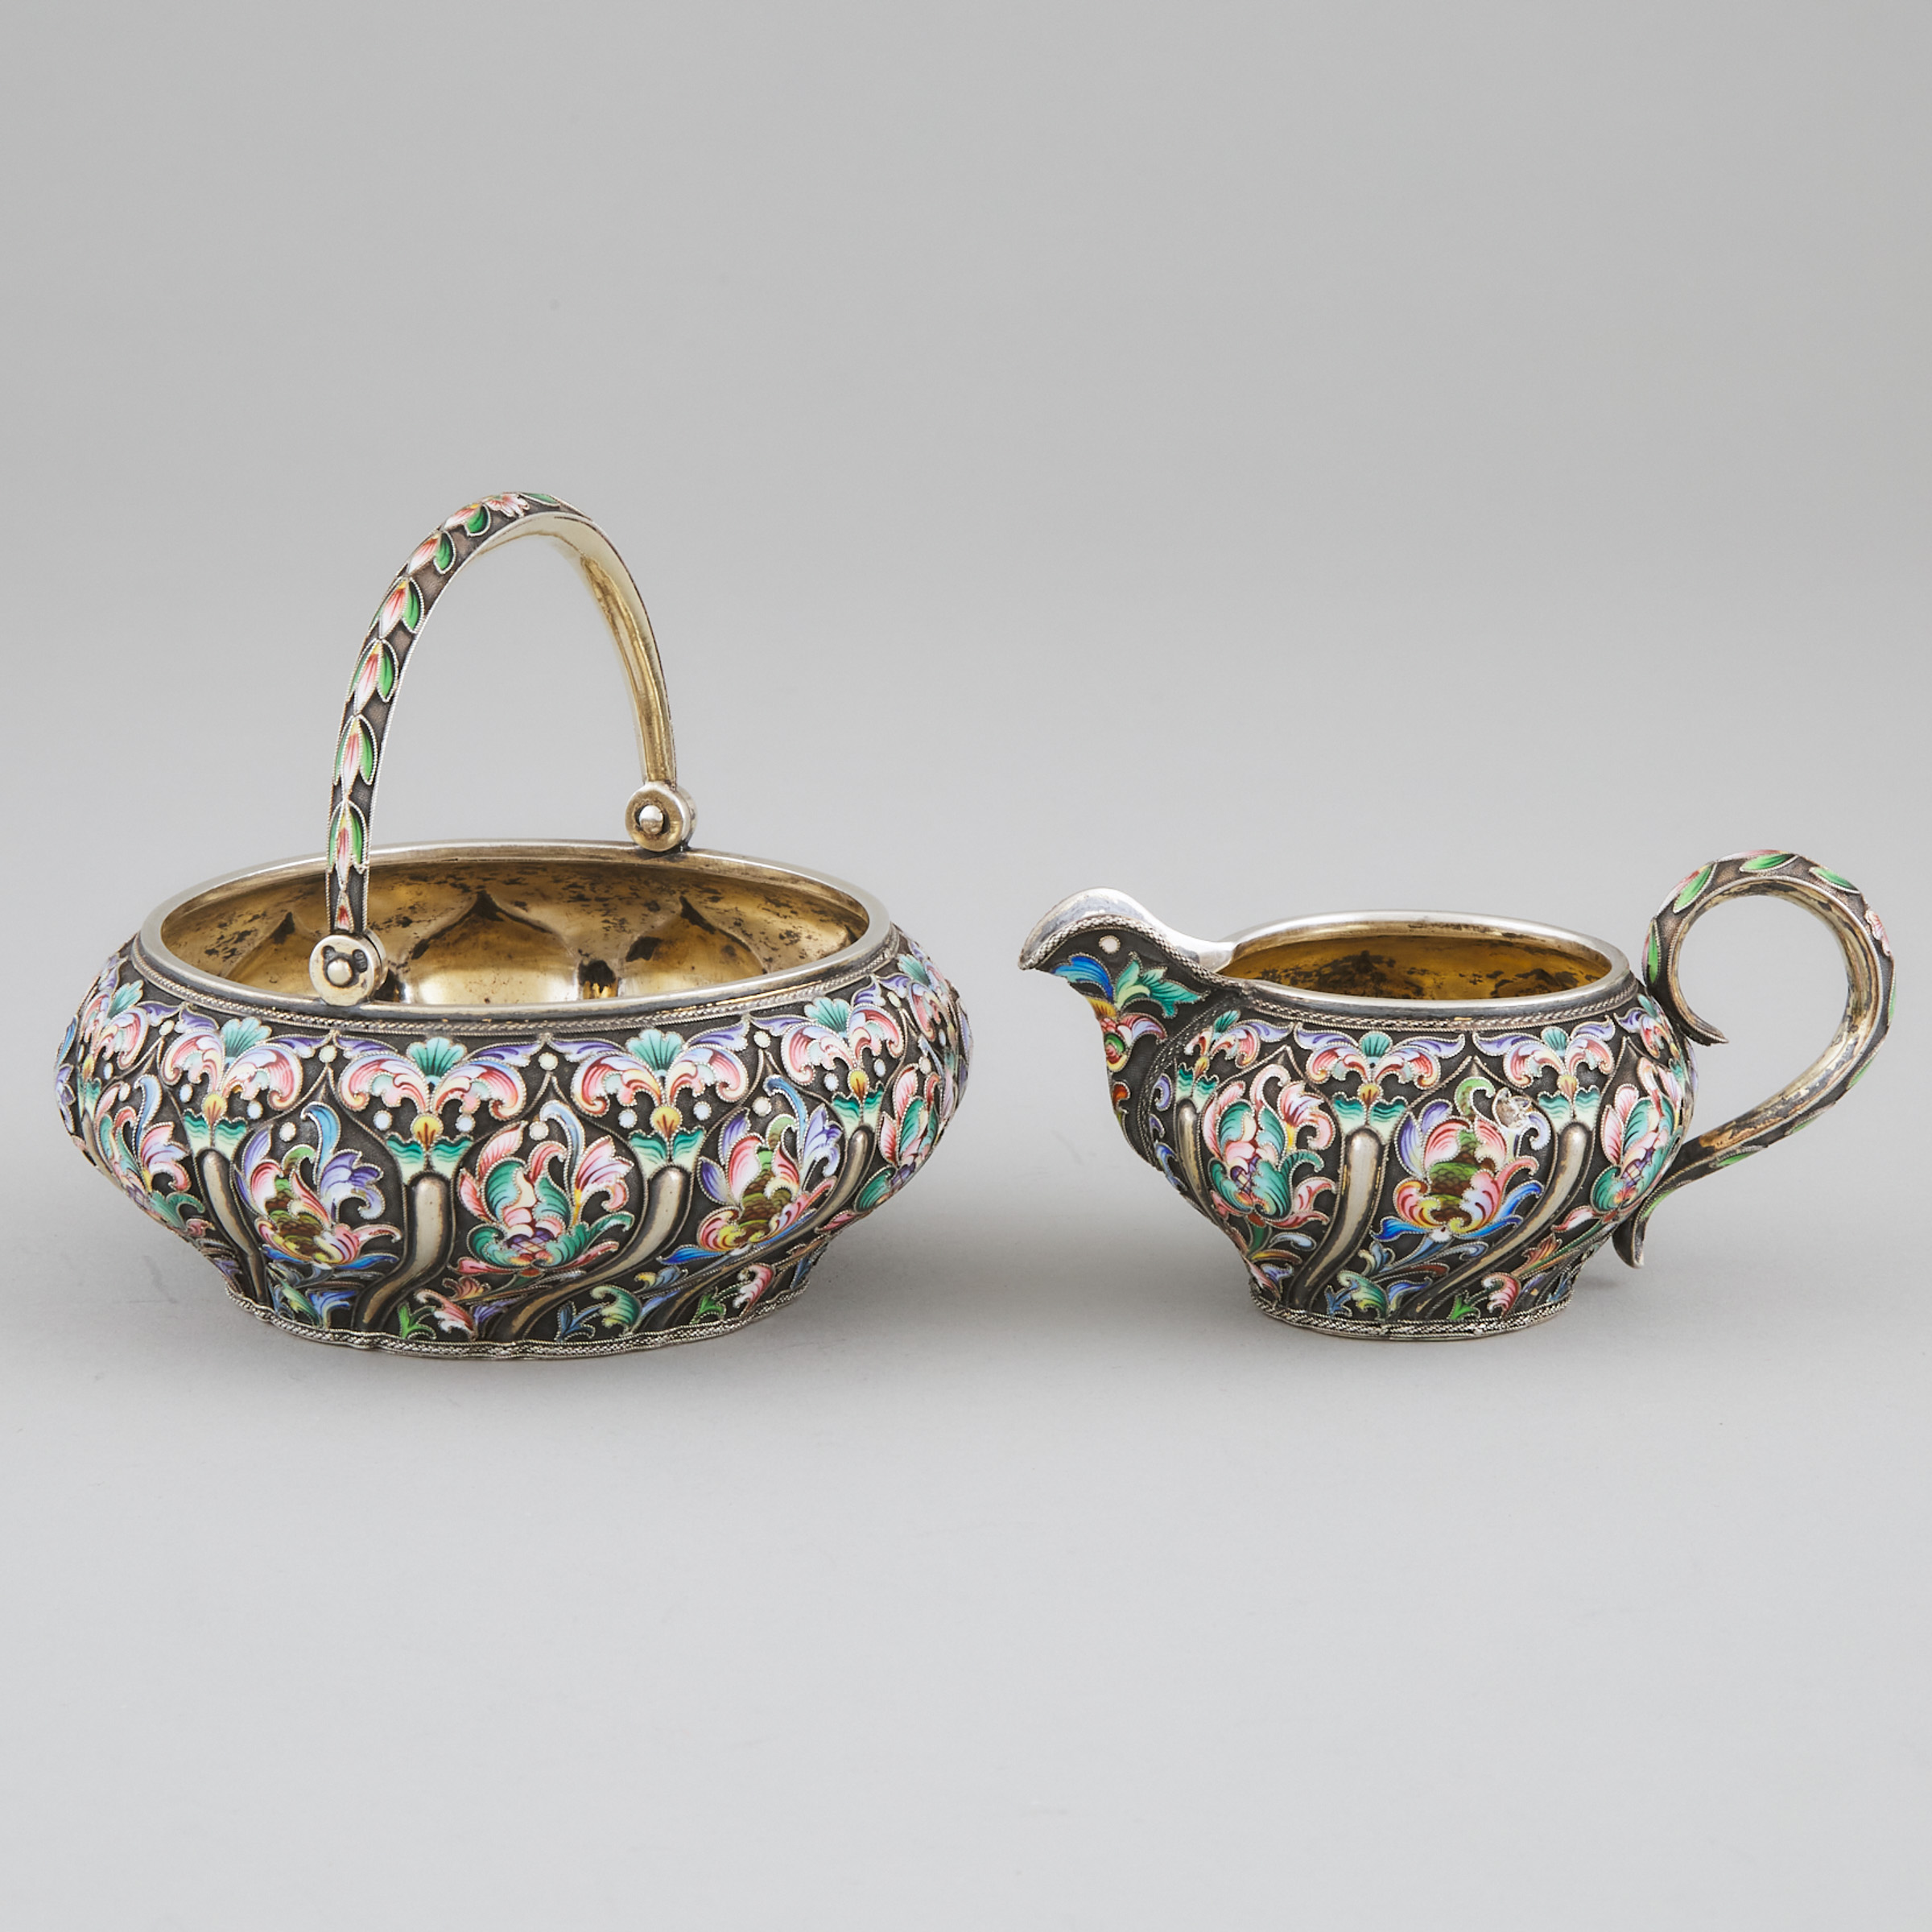 Russian Silver Shaded Cloisonné Enamel Sugar Basket and Cream Jug, Maria Semenova, Moscow, 1899-1908